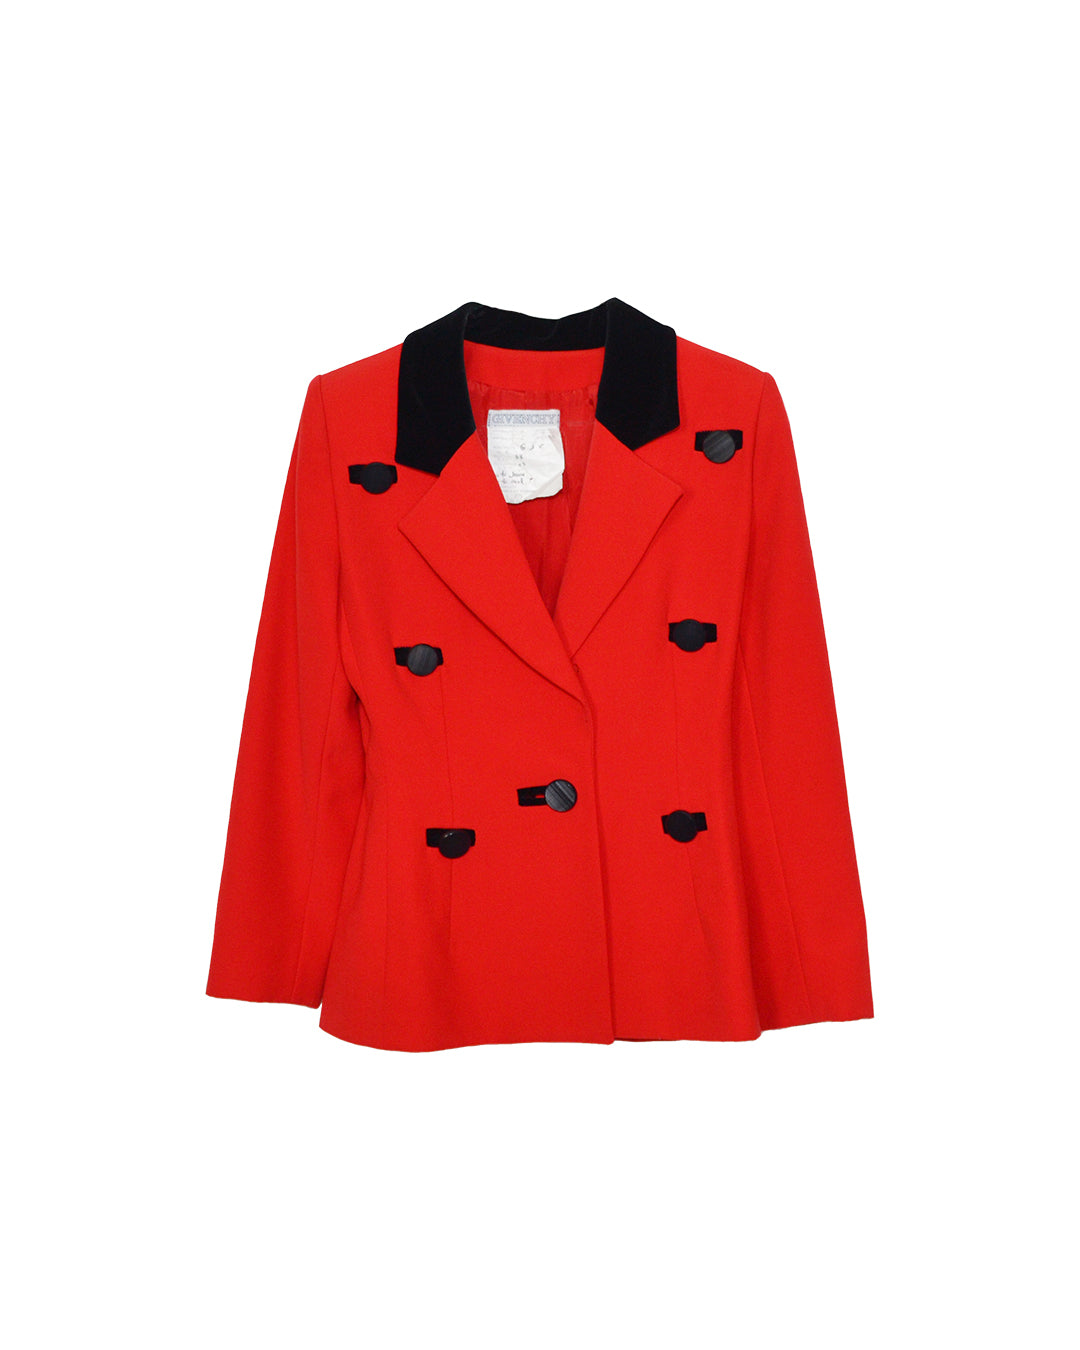 Givenchy Red and Black Blazer FR 38/US 6 // Vintage – THE IRREVERENT®